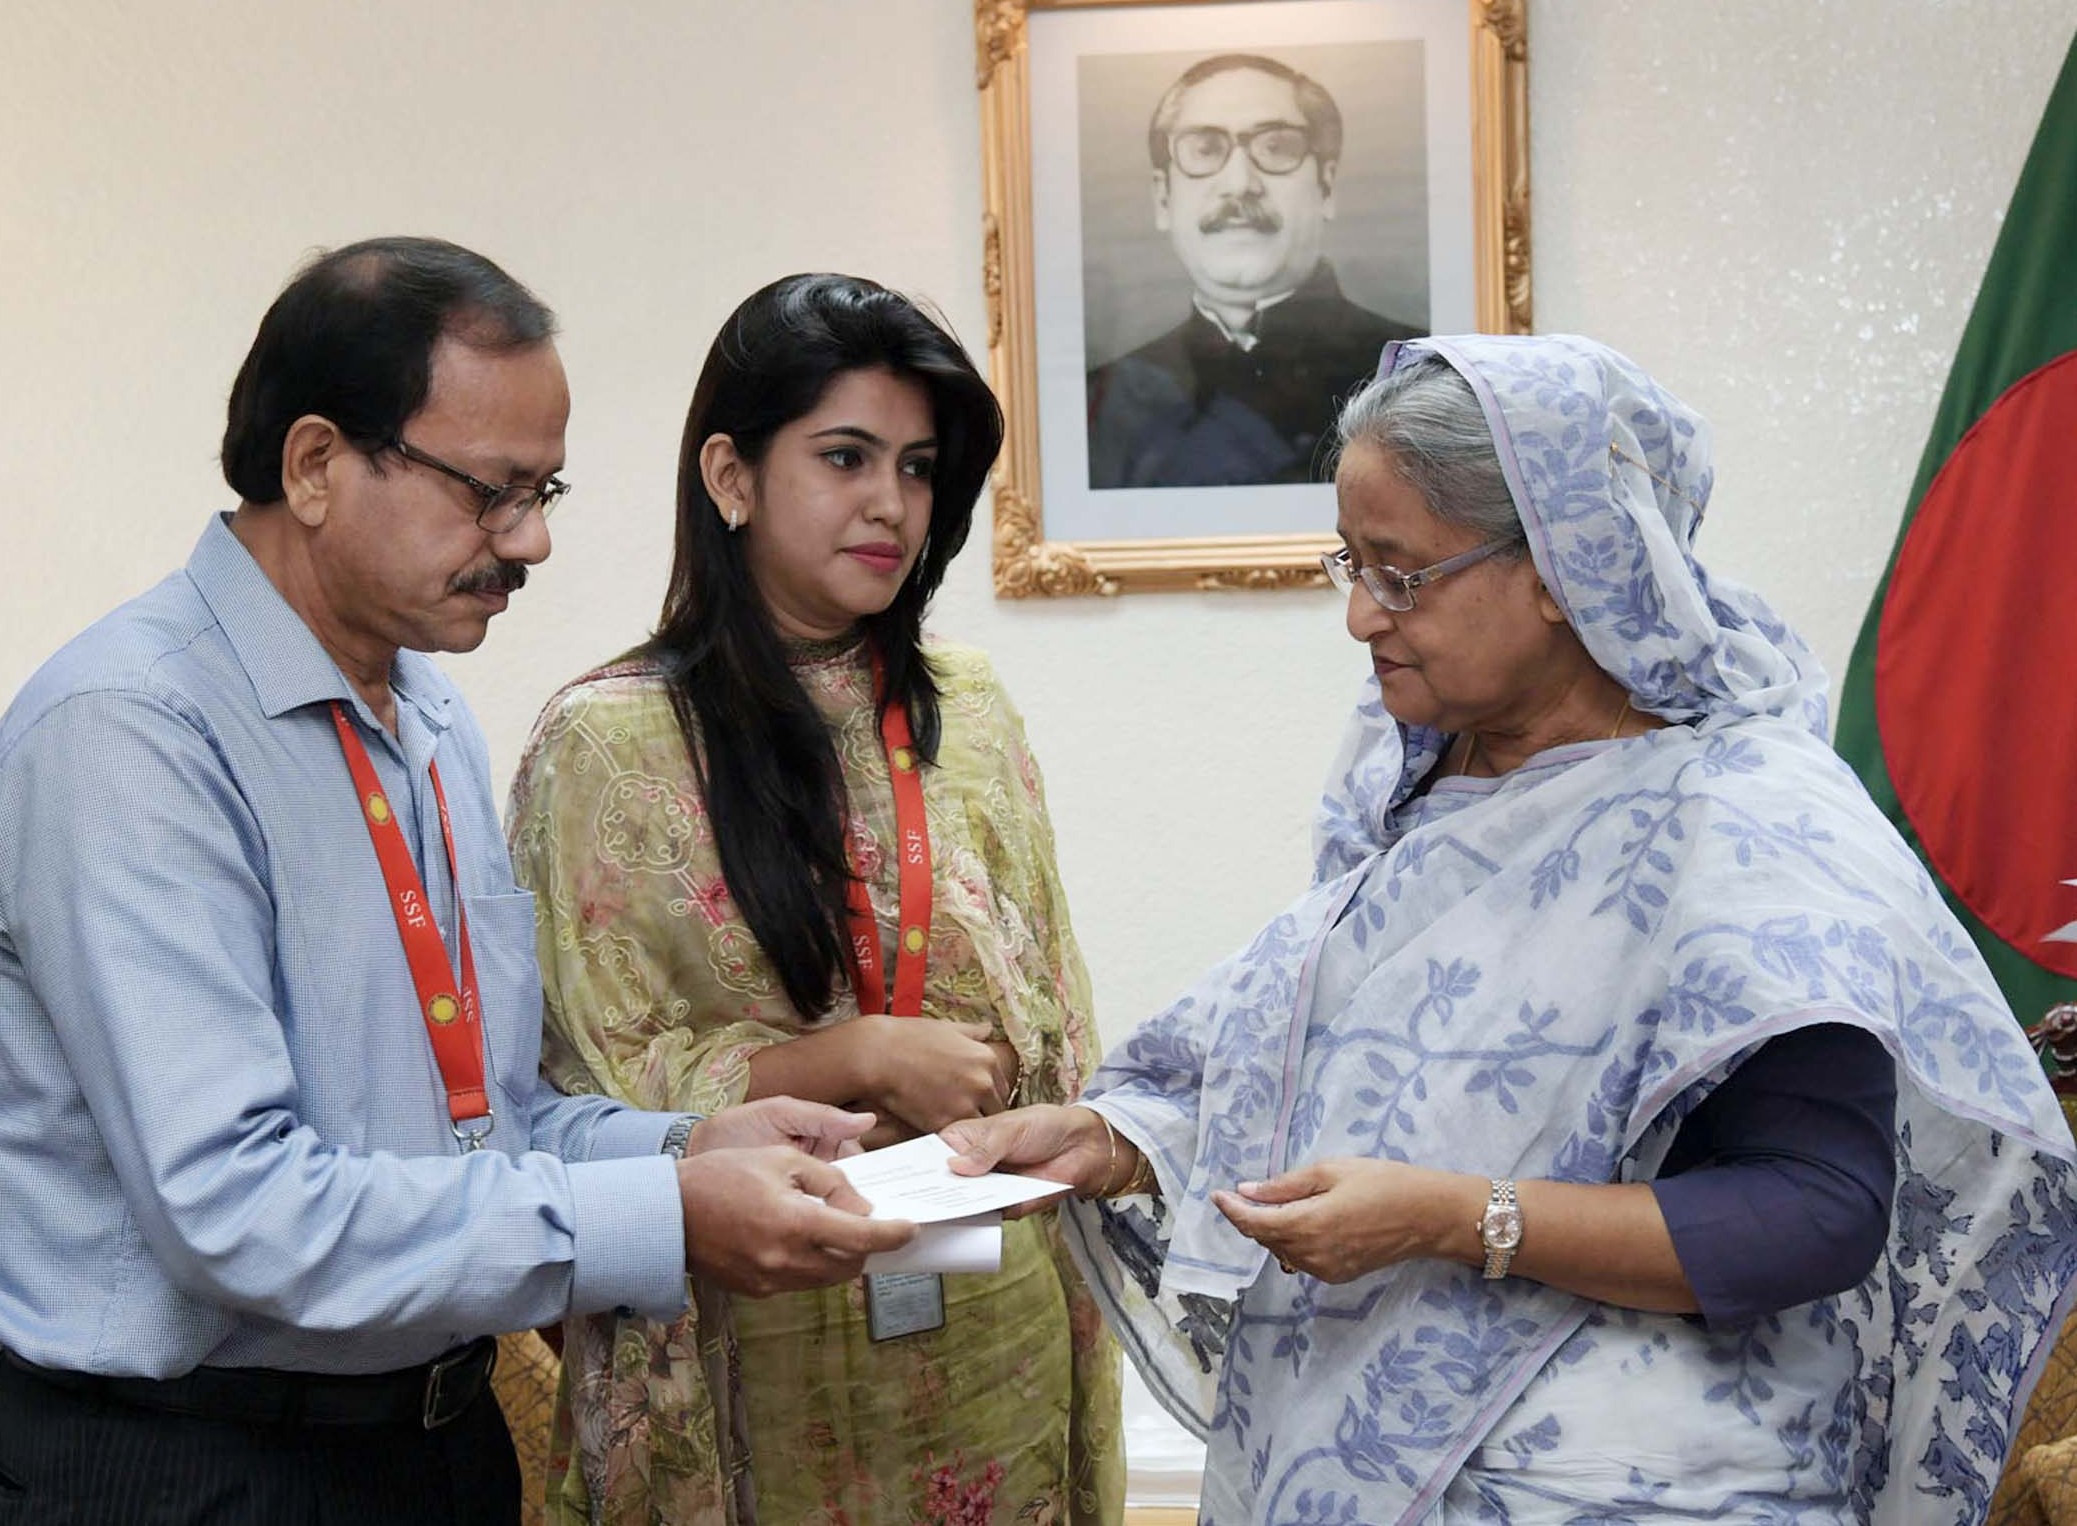 Bangladesh develops under Sheikh Hasina